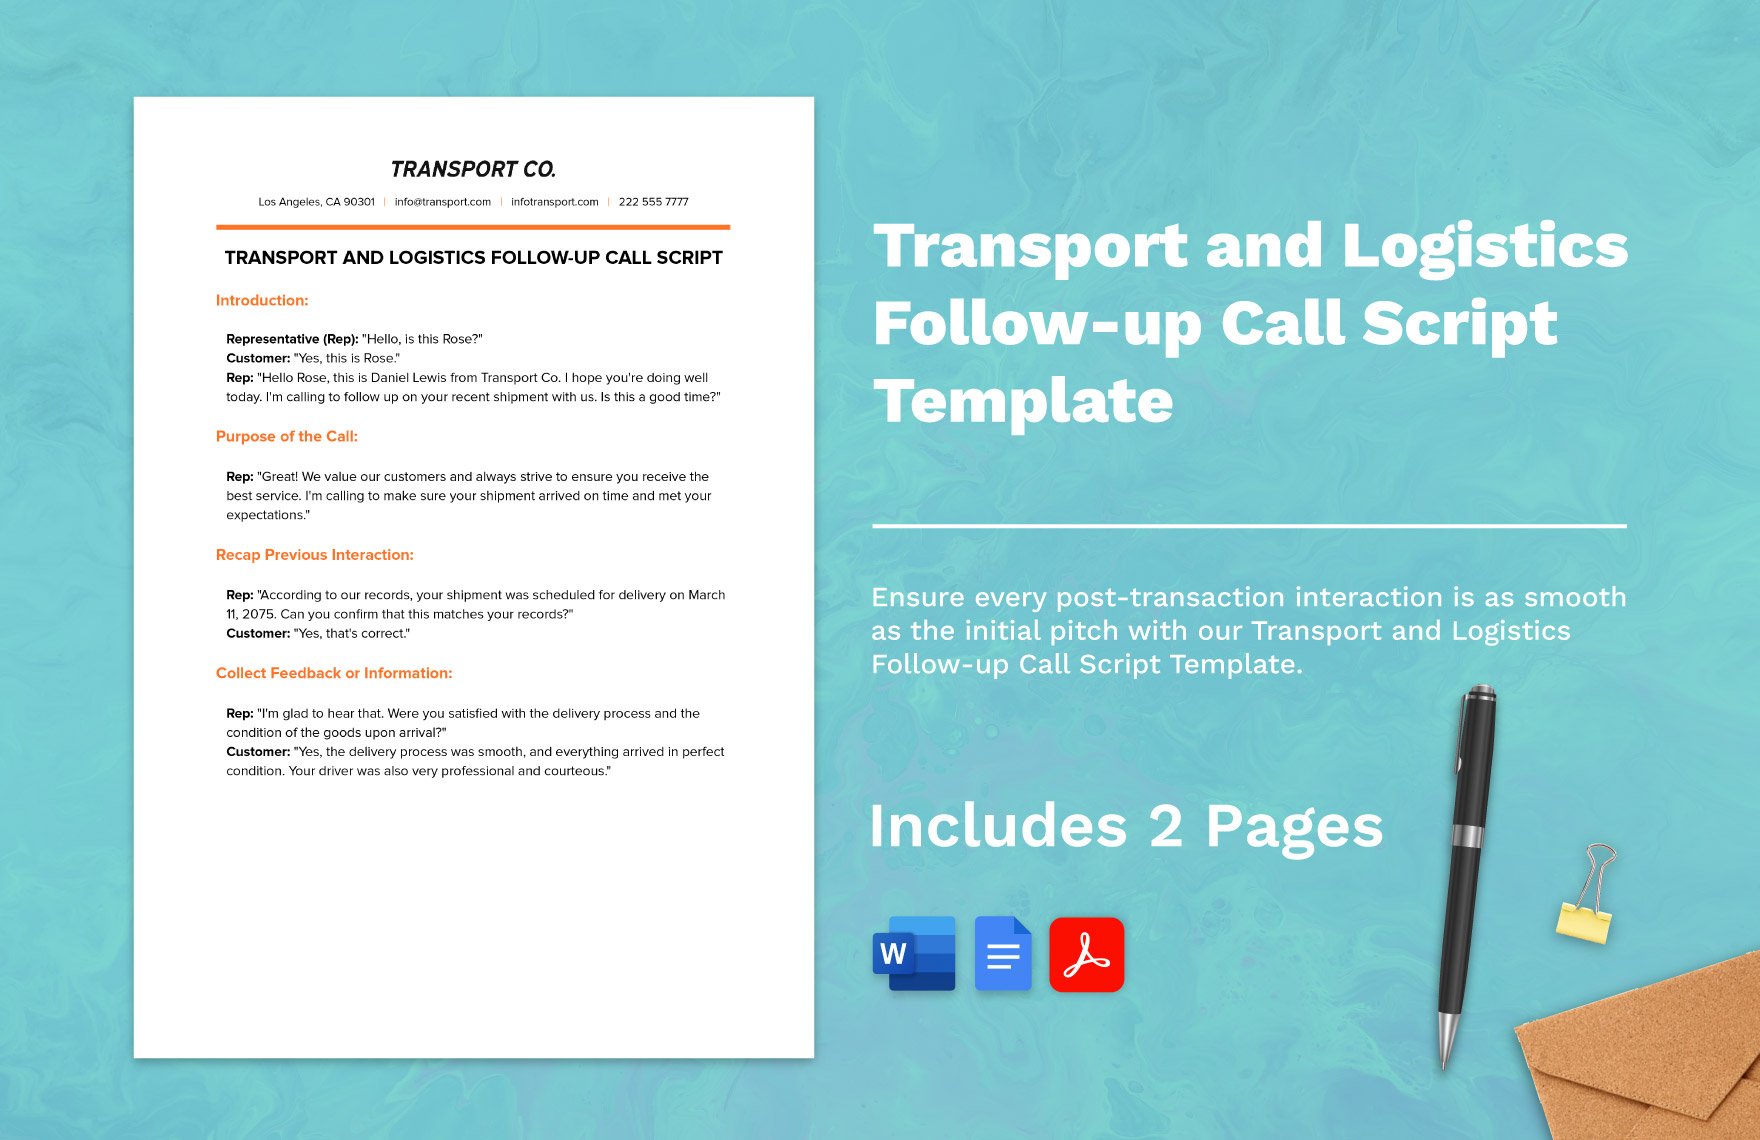 Transport and Logistics Follow-up Call Script Template